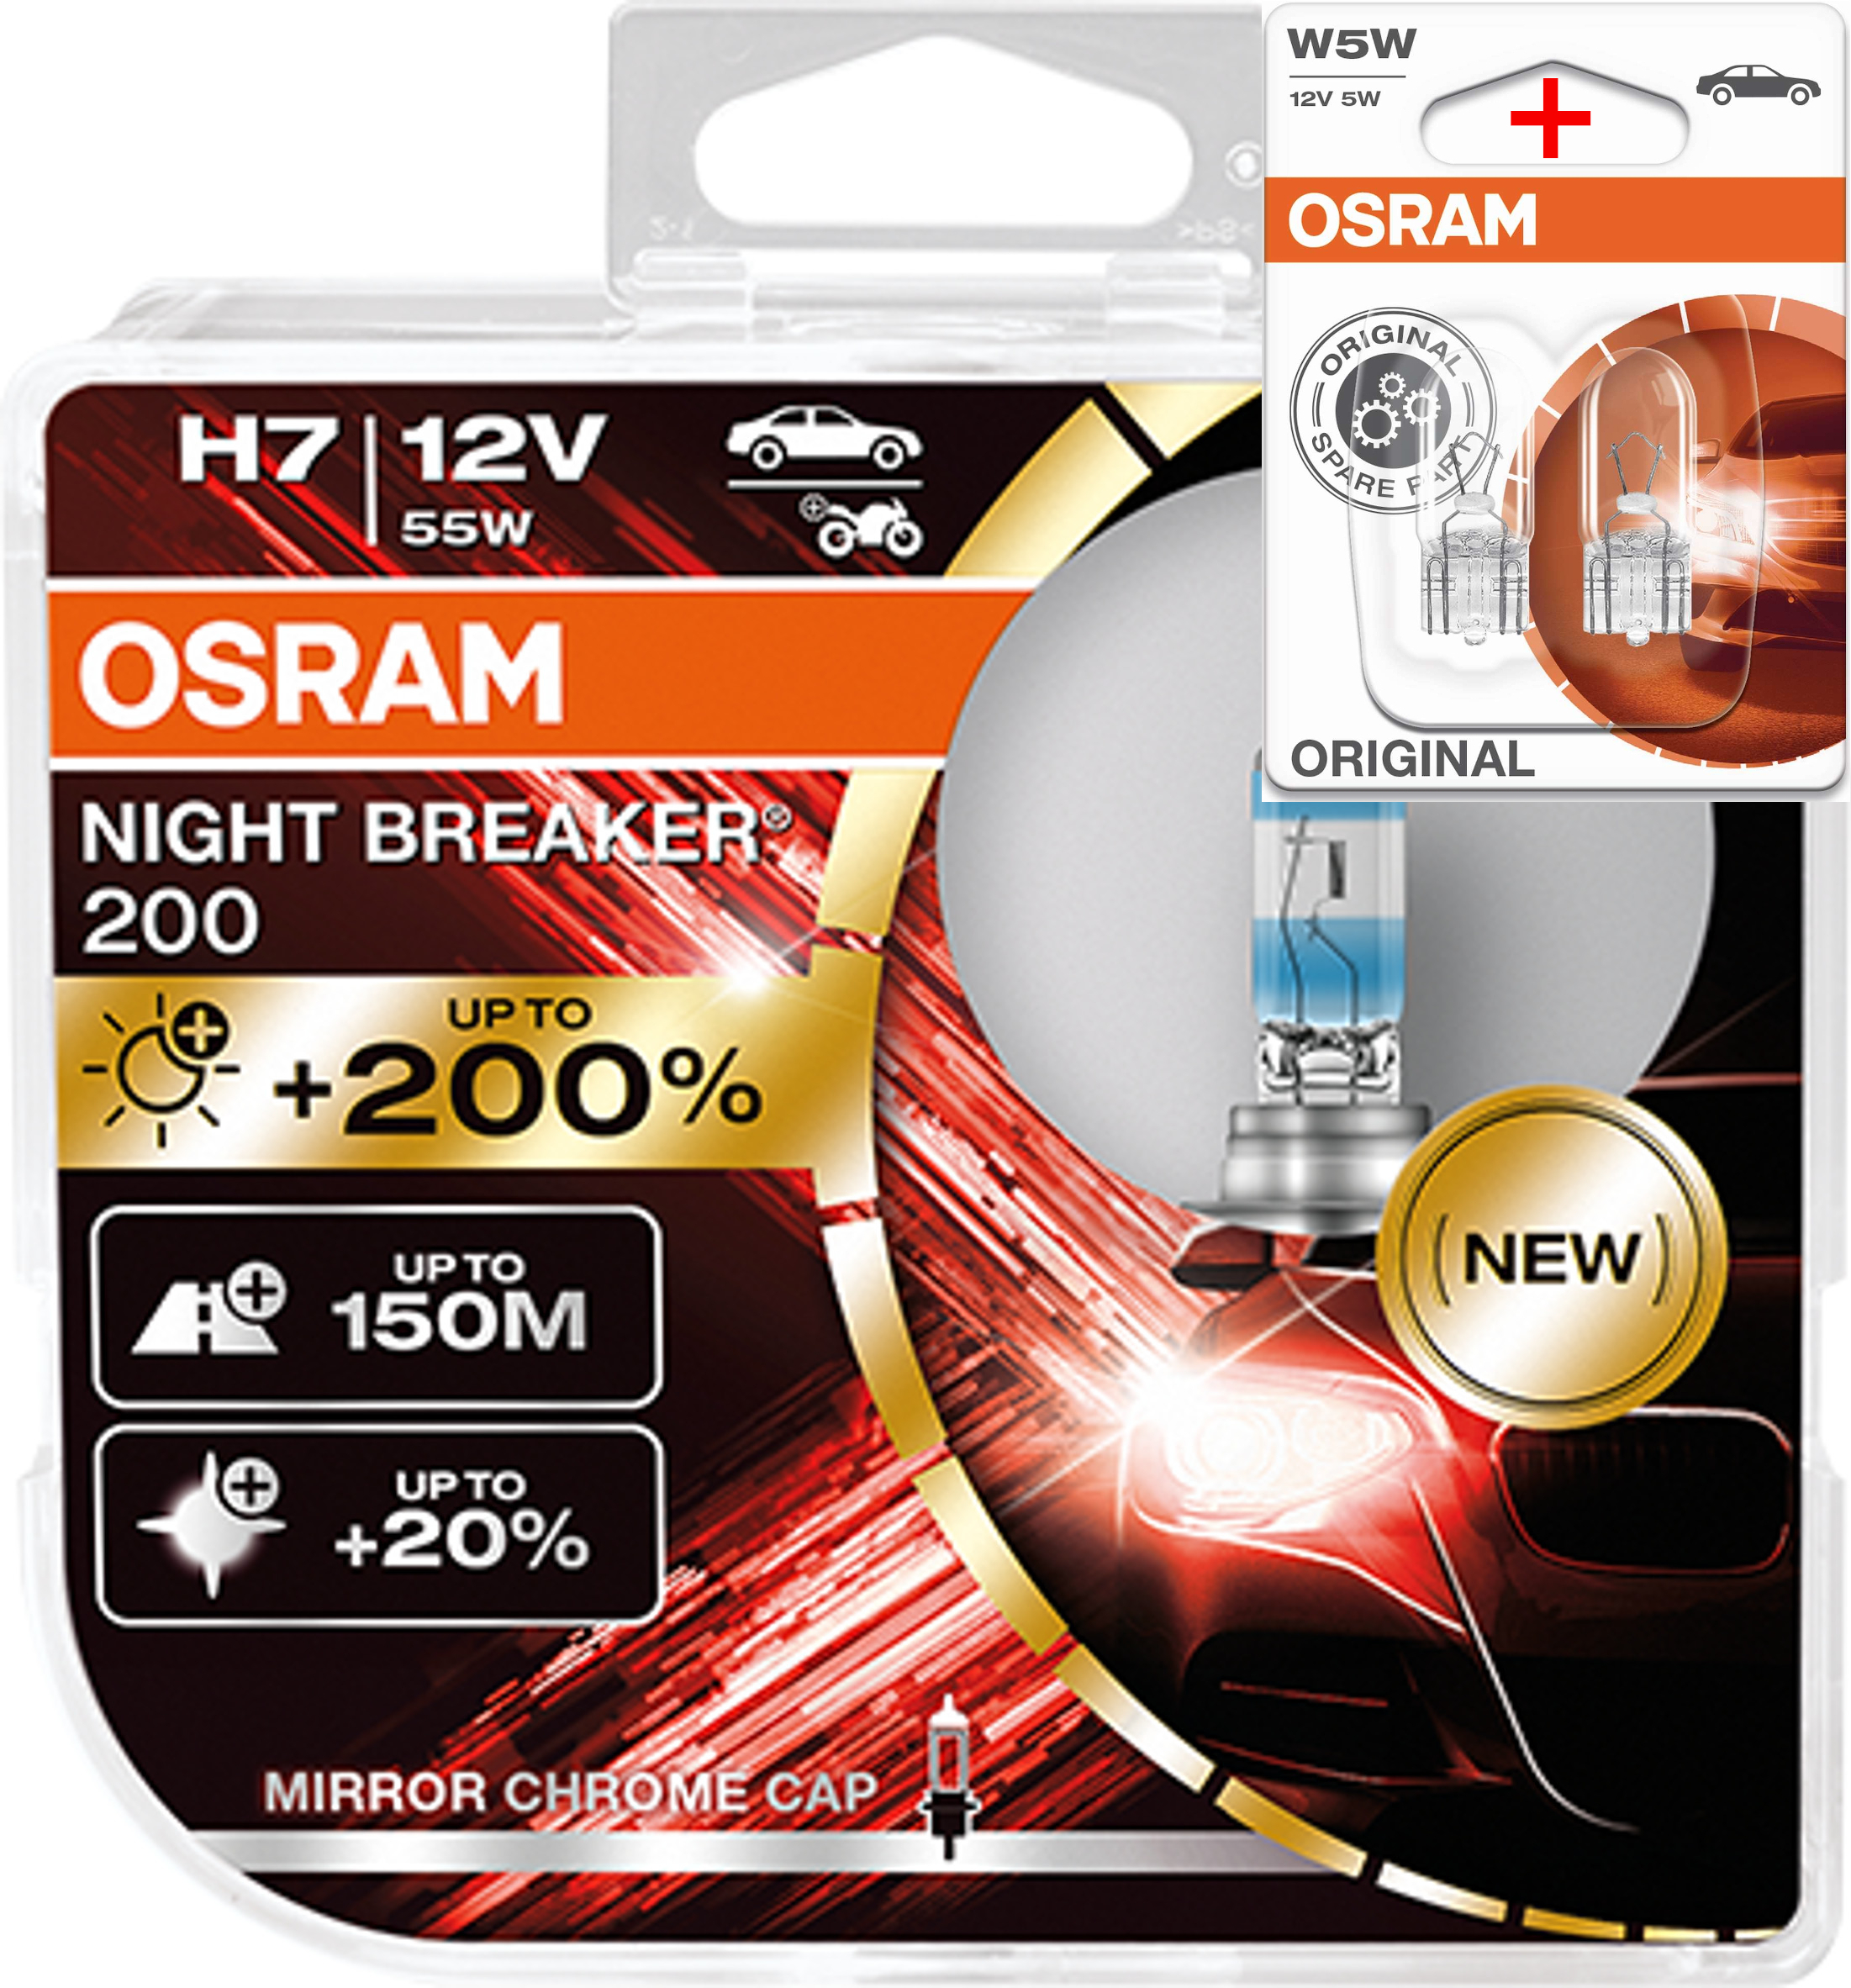 Osram NightBreaker Laser CoolBlue Xenarc UltraLife All Types Free Choice  2pcs